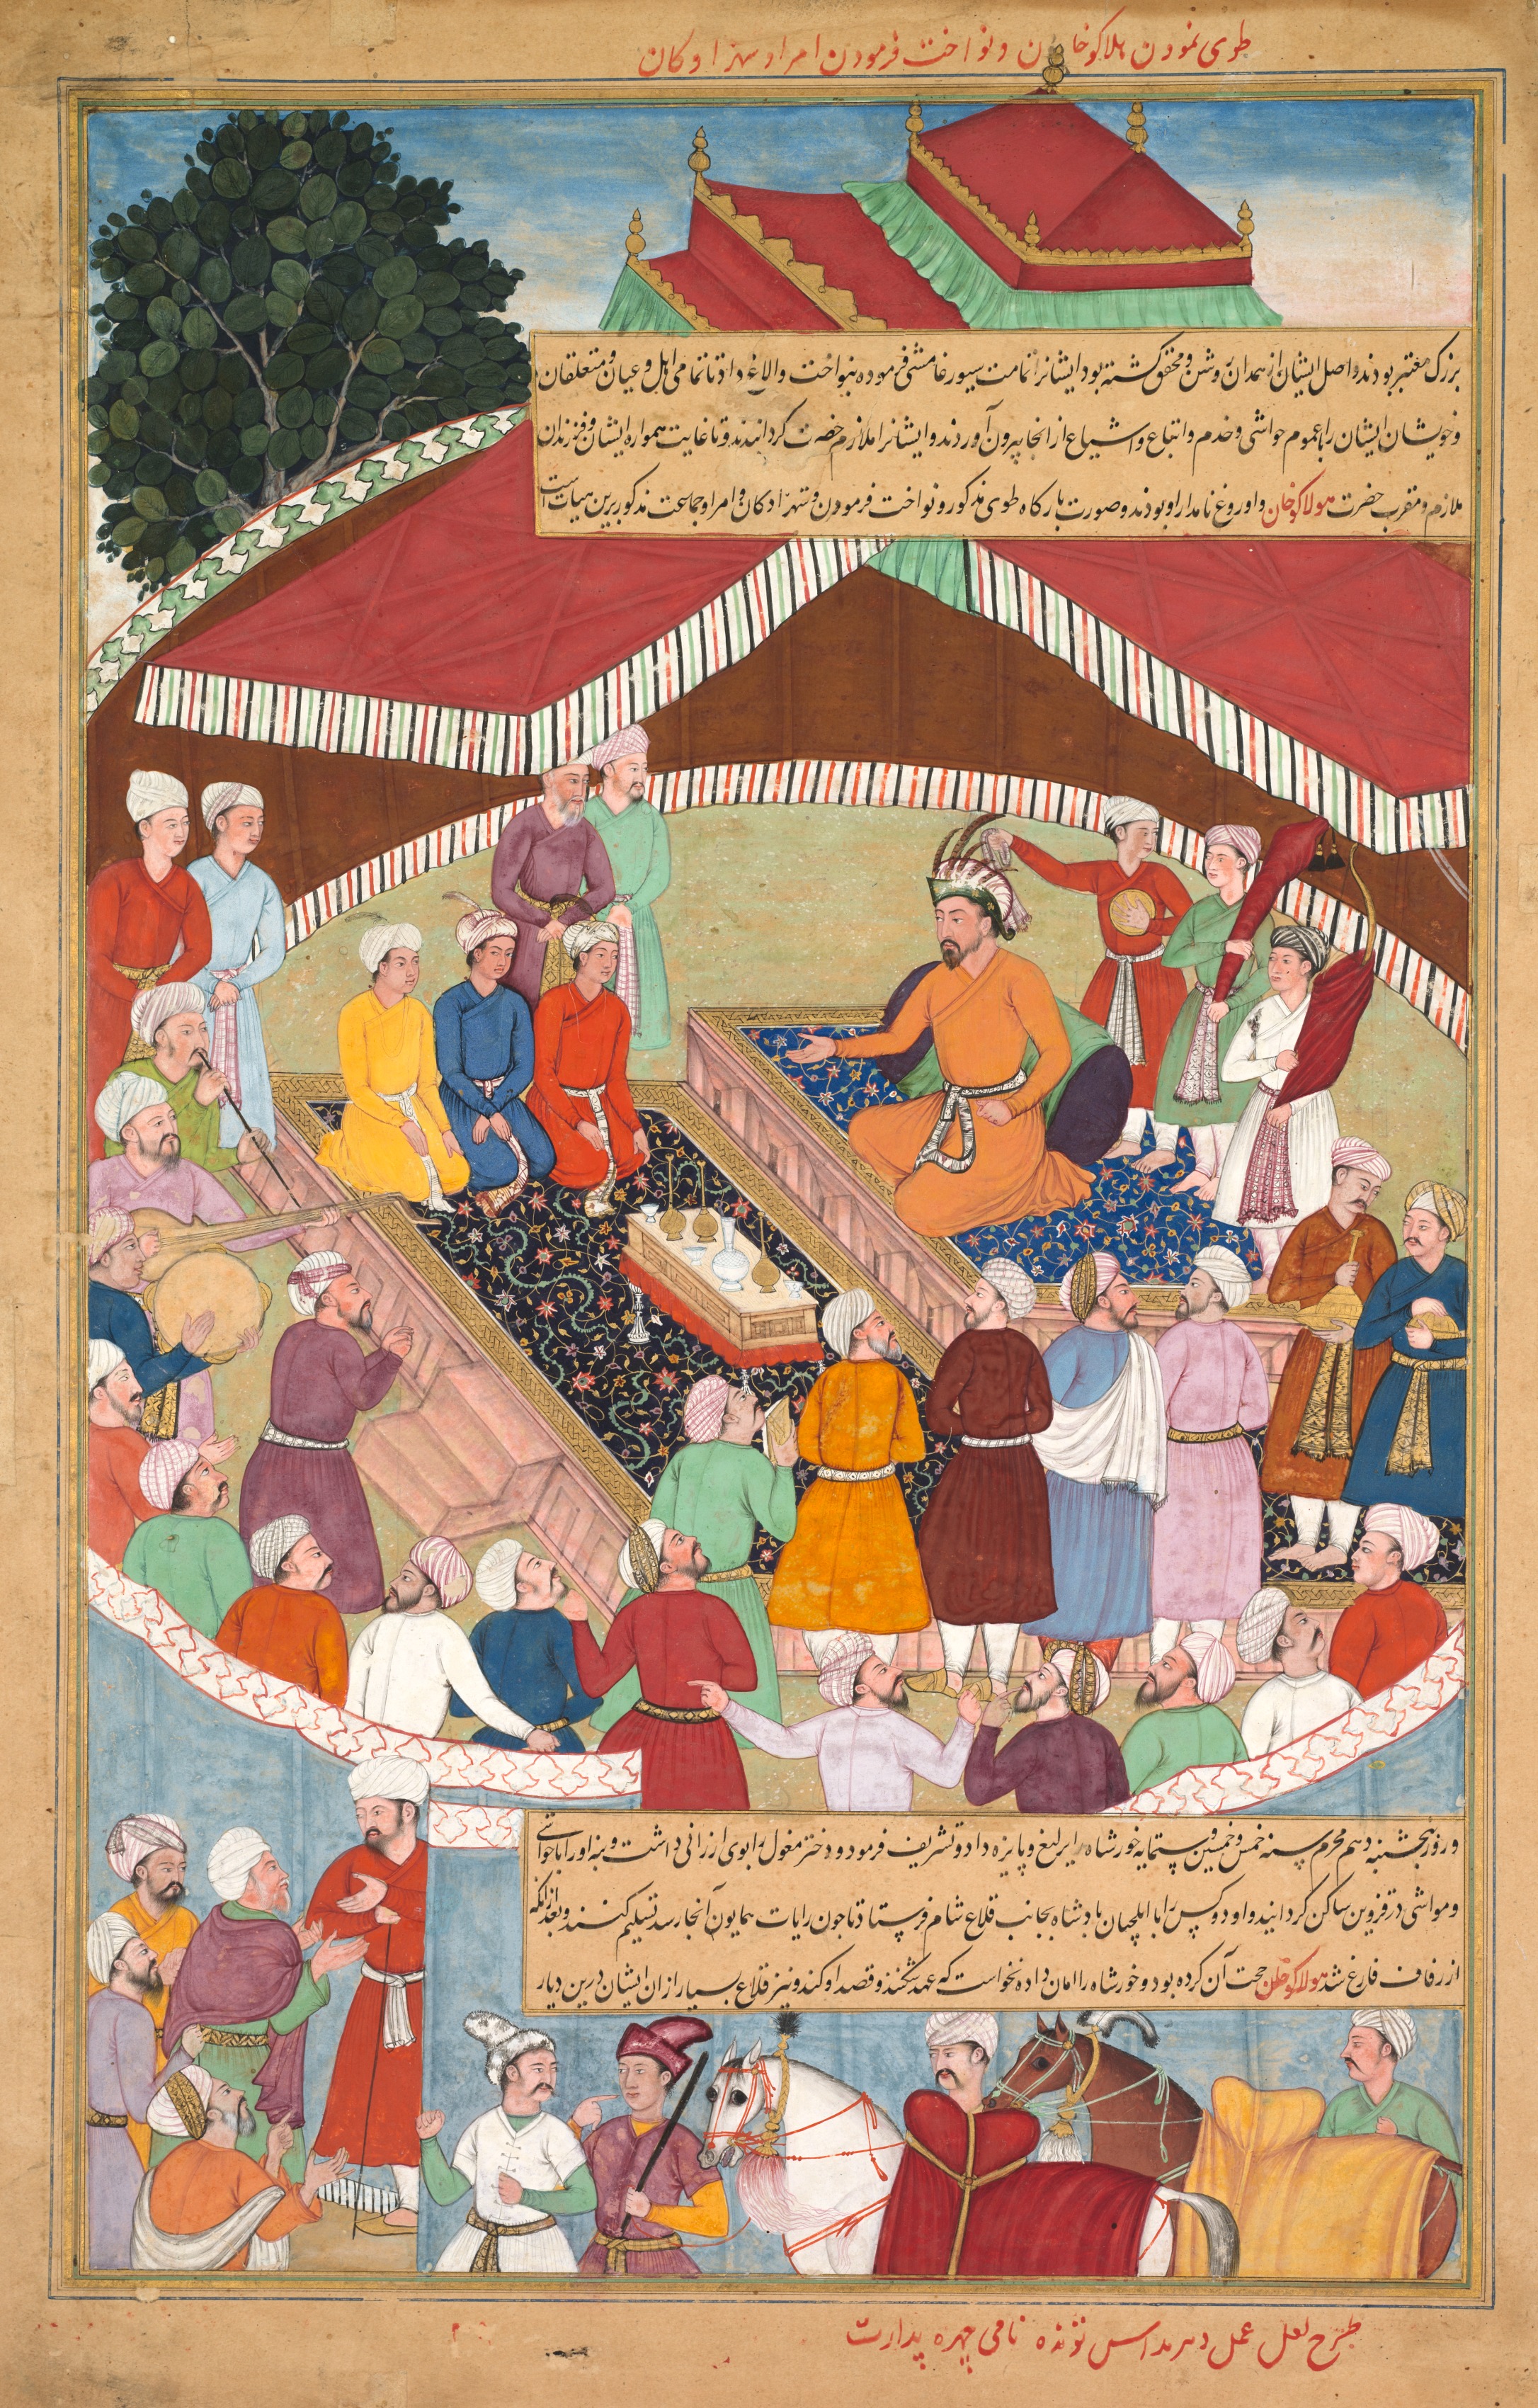 Hulagu Khan giving a feast and dispensing favor upon the amirs and princes, from a Chingiz-nama (Book of Chingiz Khan) of the Jami al-tavarikh (Compendium of Chronicles)